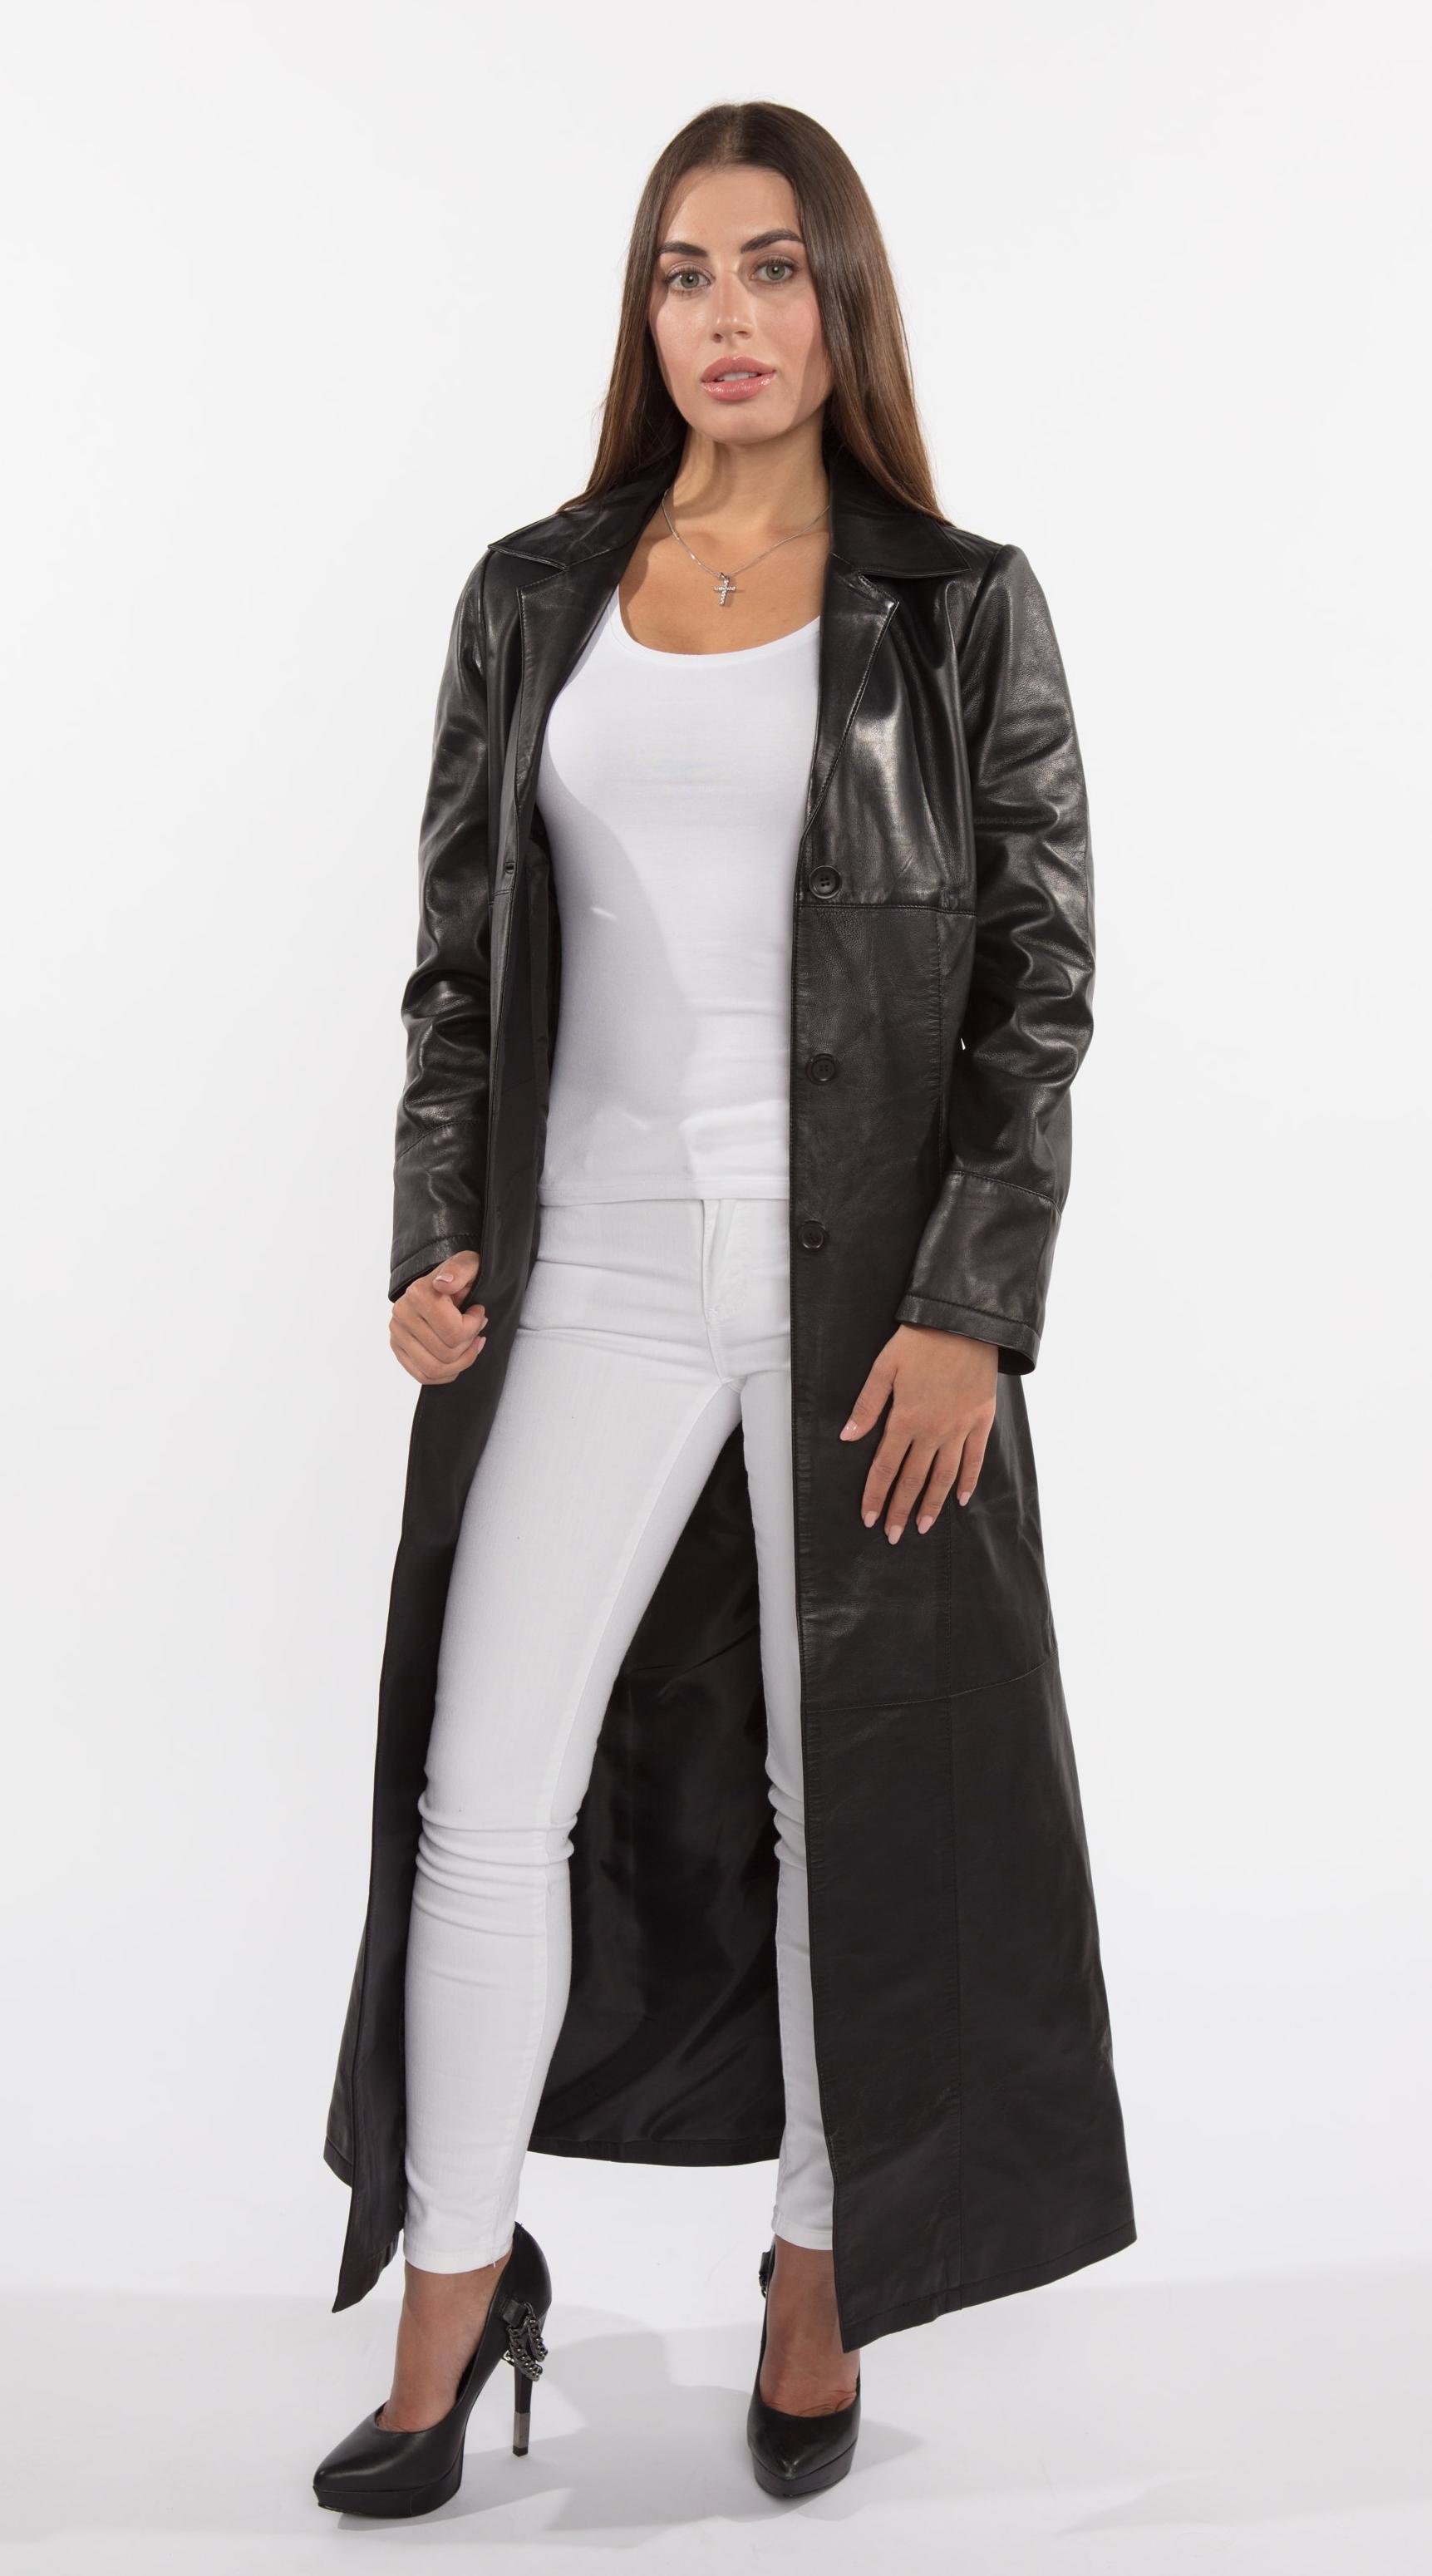 Alessandra Leather Jacket | Leather jackets women, Collarless jacket  outfit, Leather jacket style